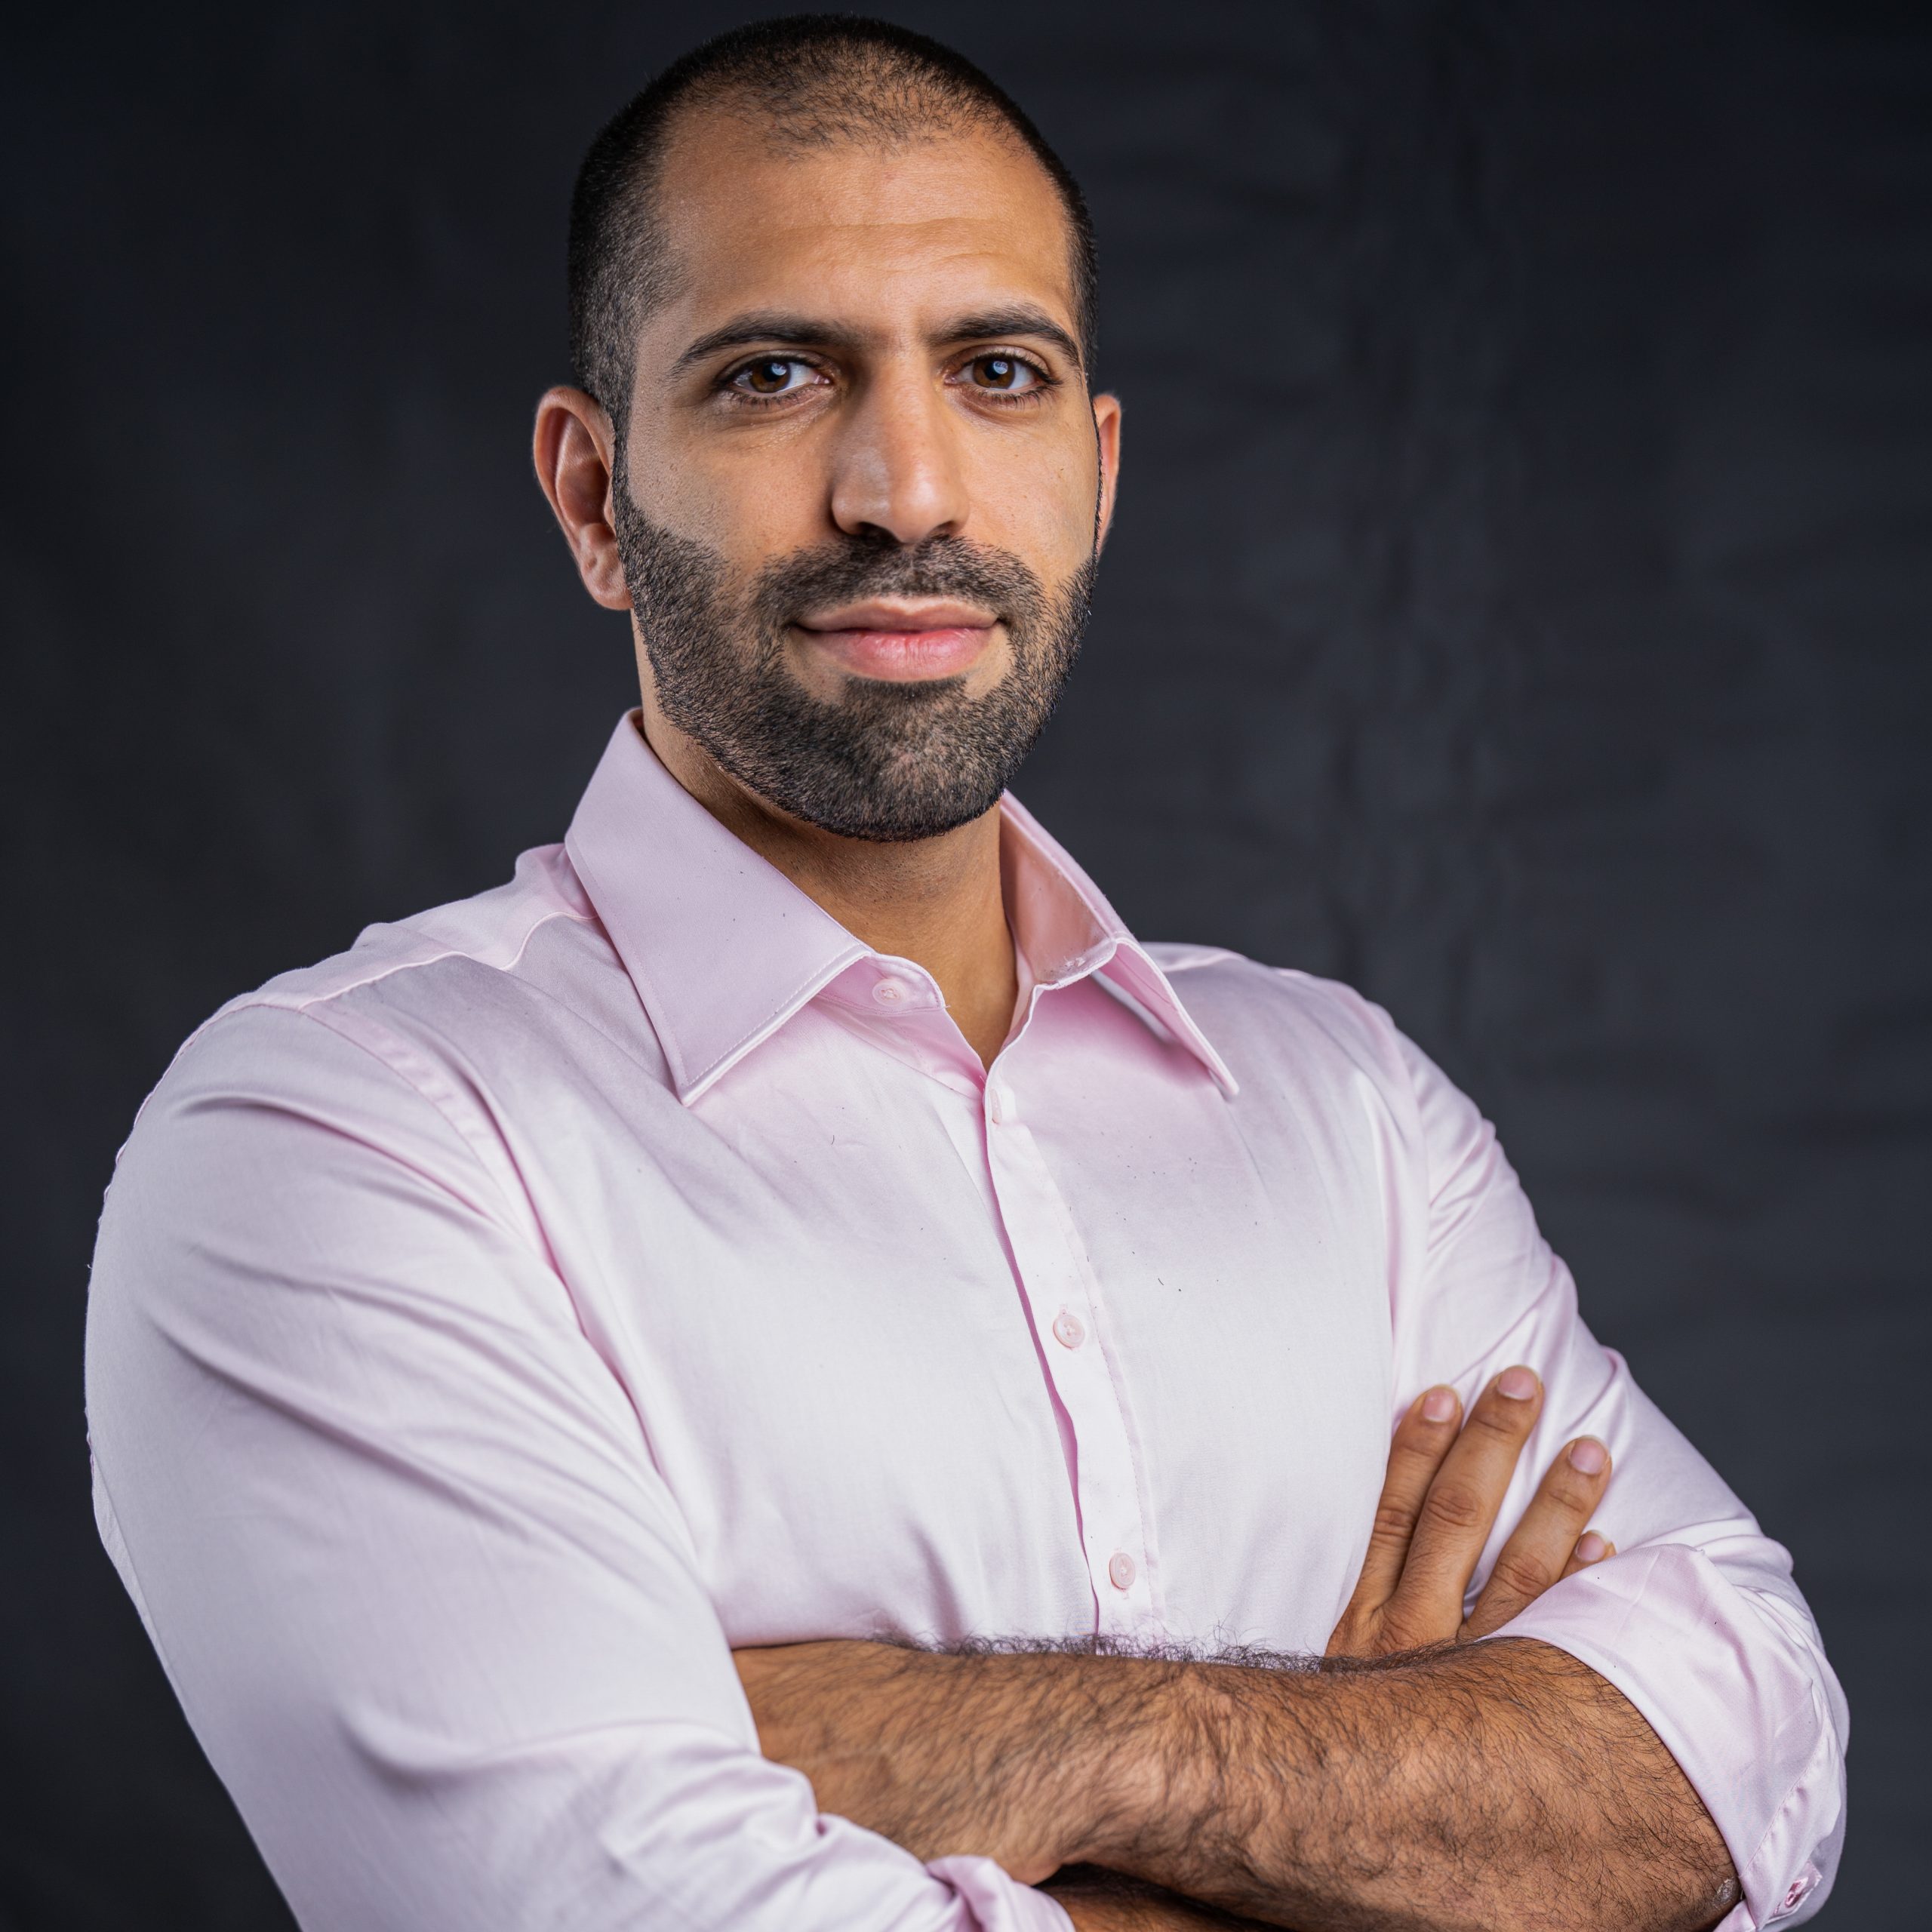 Abdulhadi Aldawani the Founder and CEO